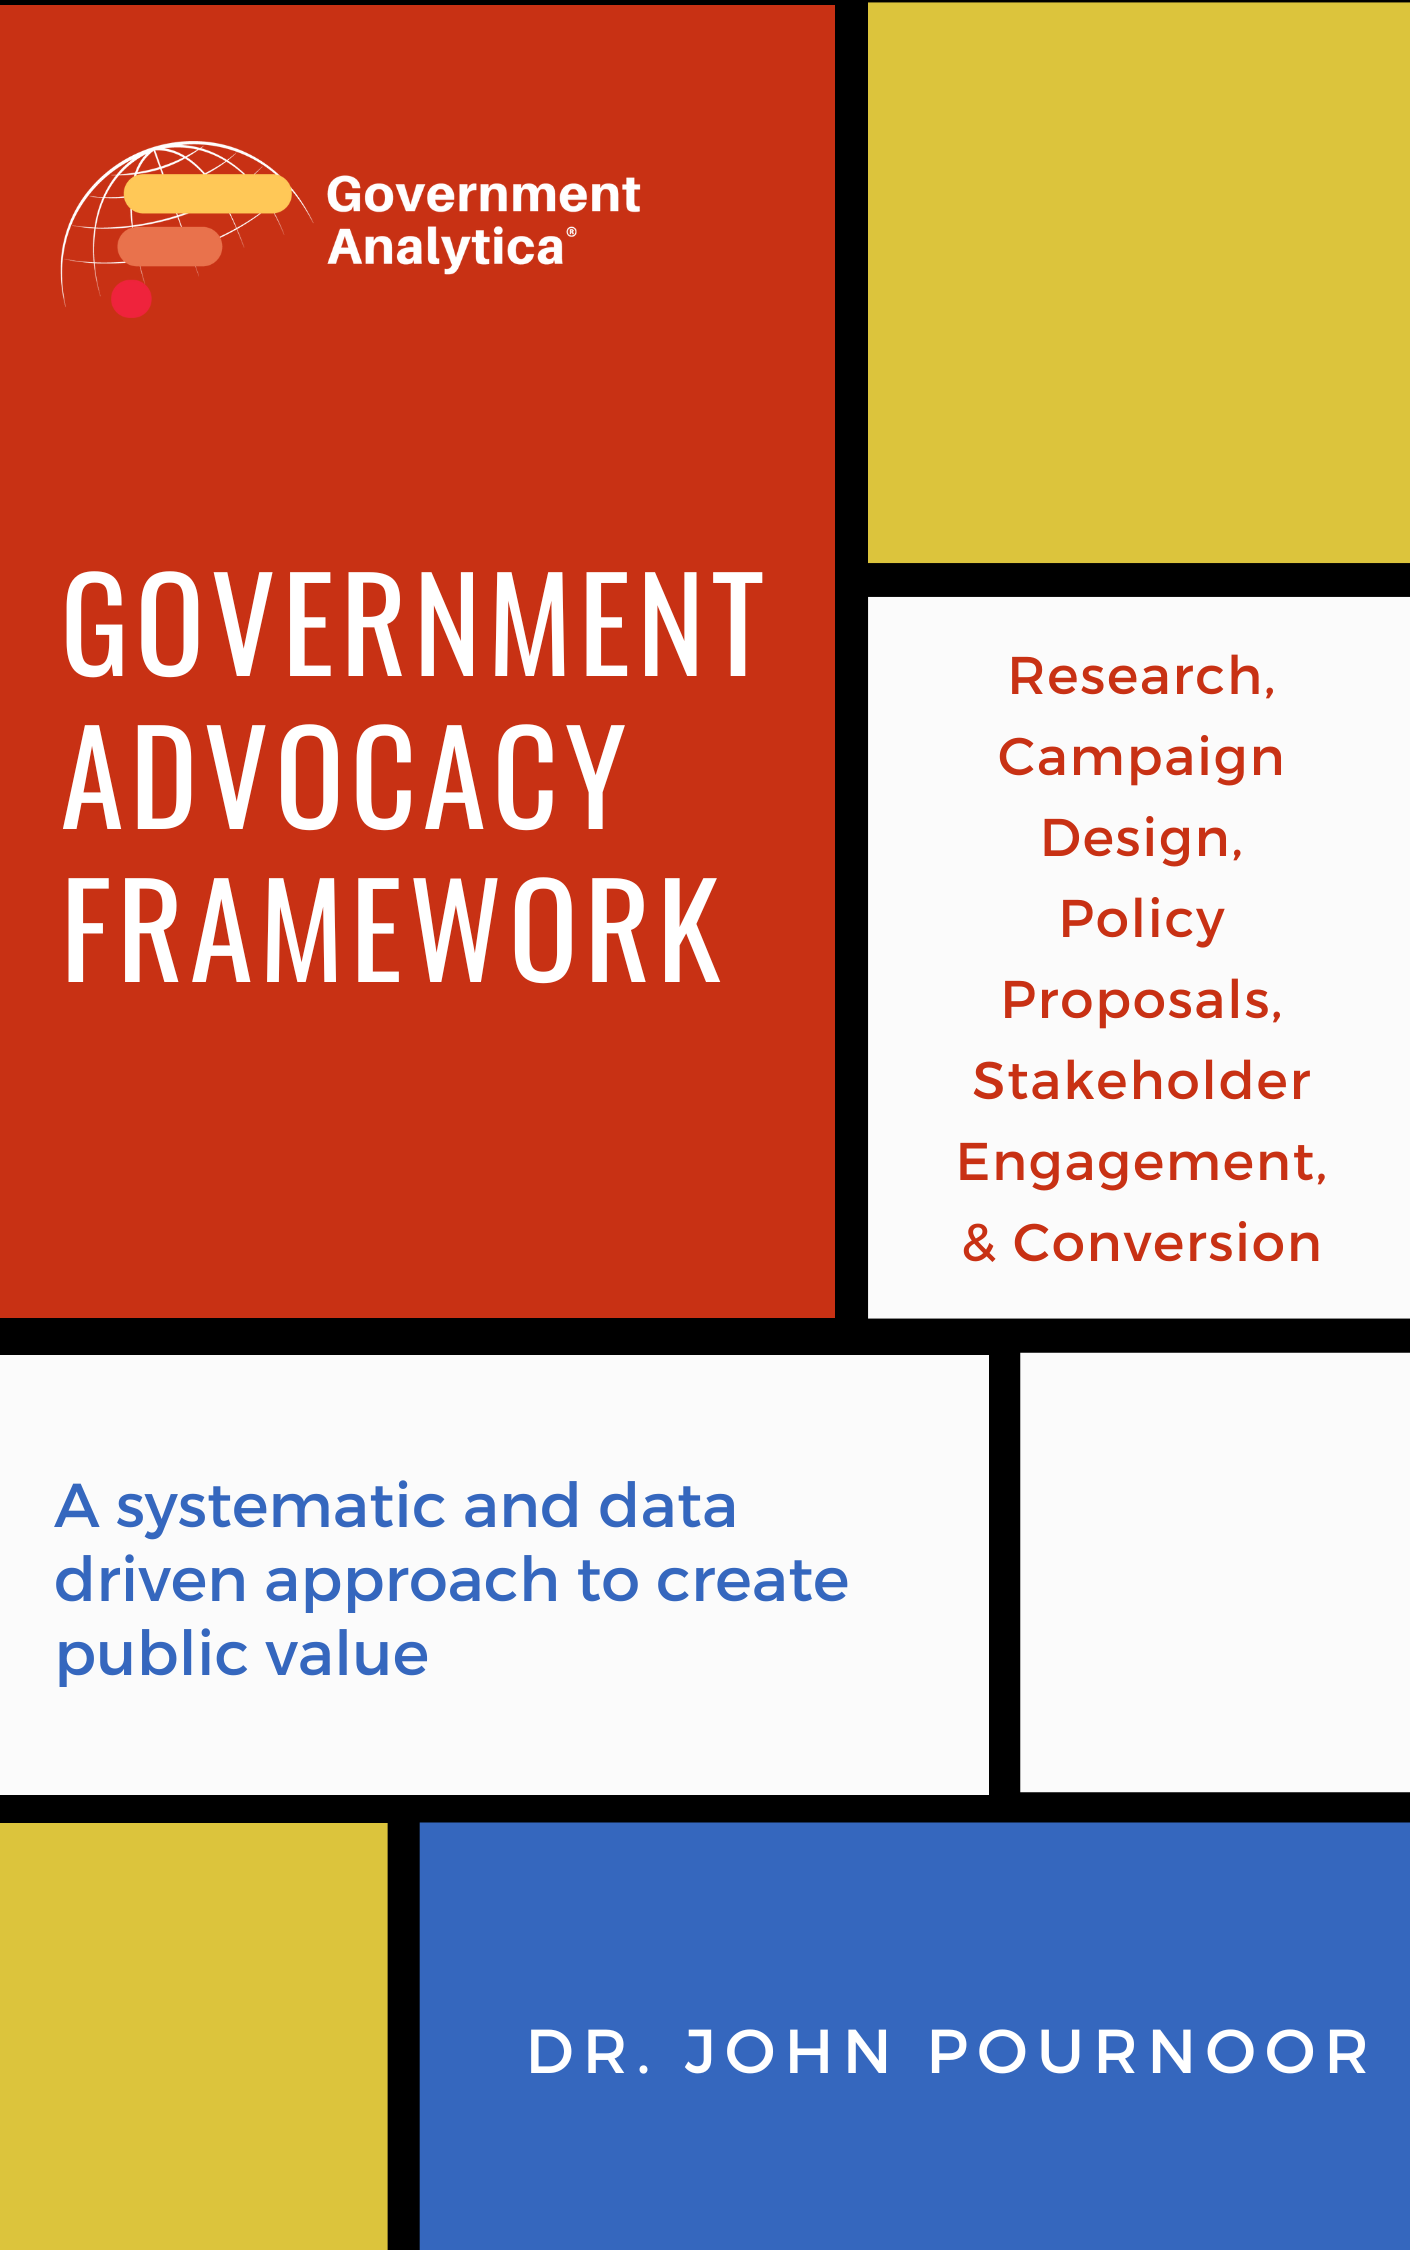 GA Government Advocacy System Book Cover-2